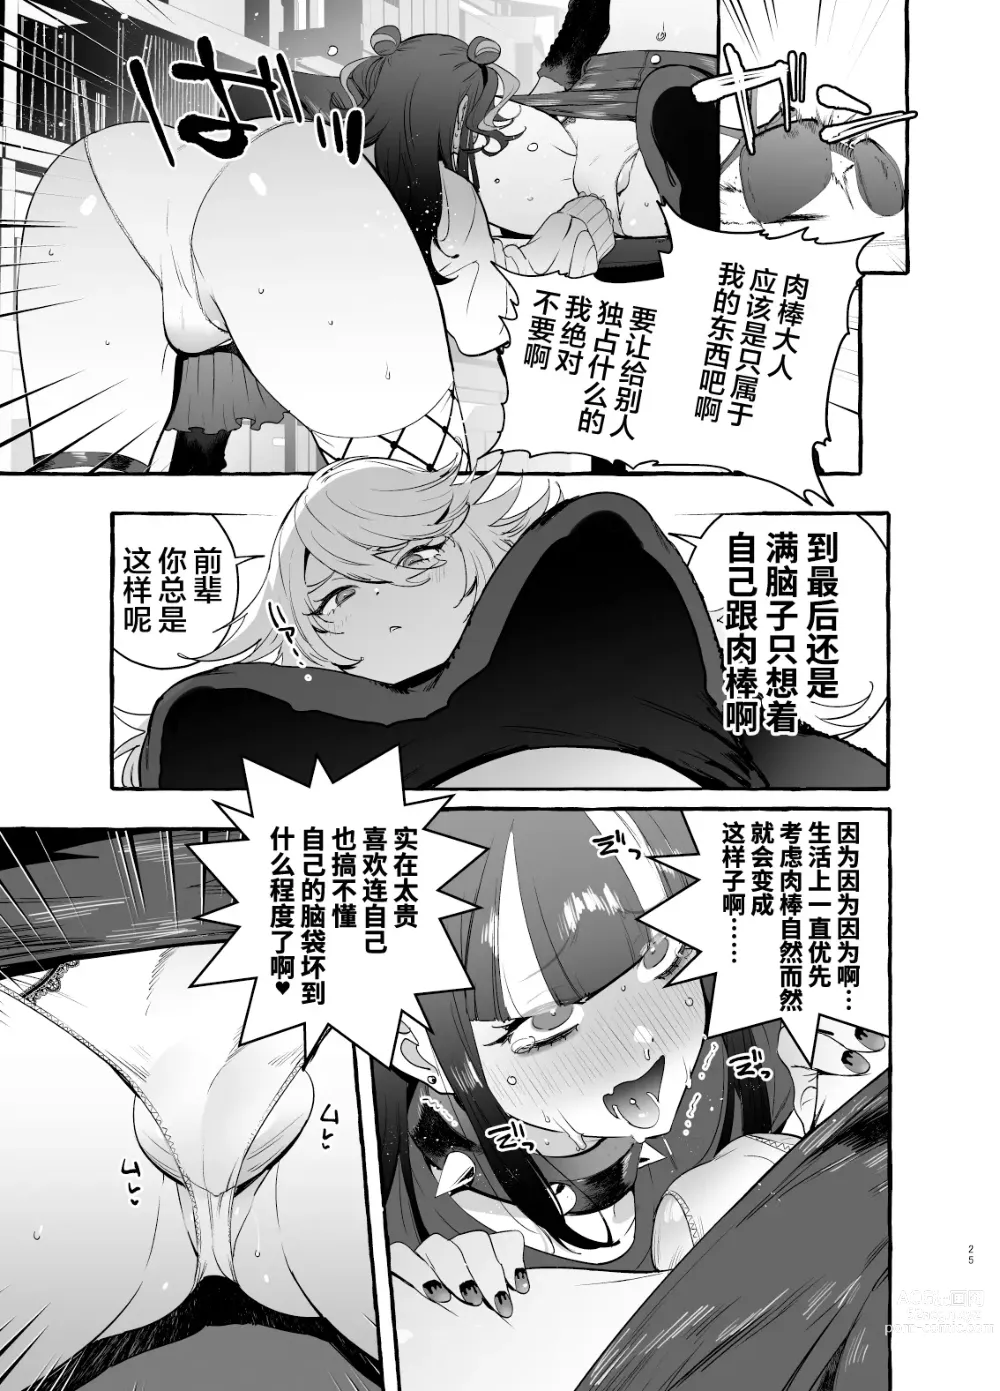 Page 27 of doujinshi Wotasa no Gyaru VS Jirai Otoko